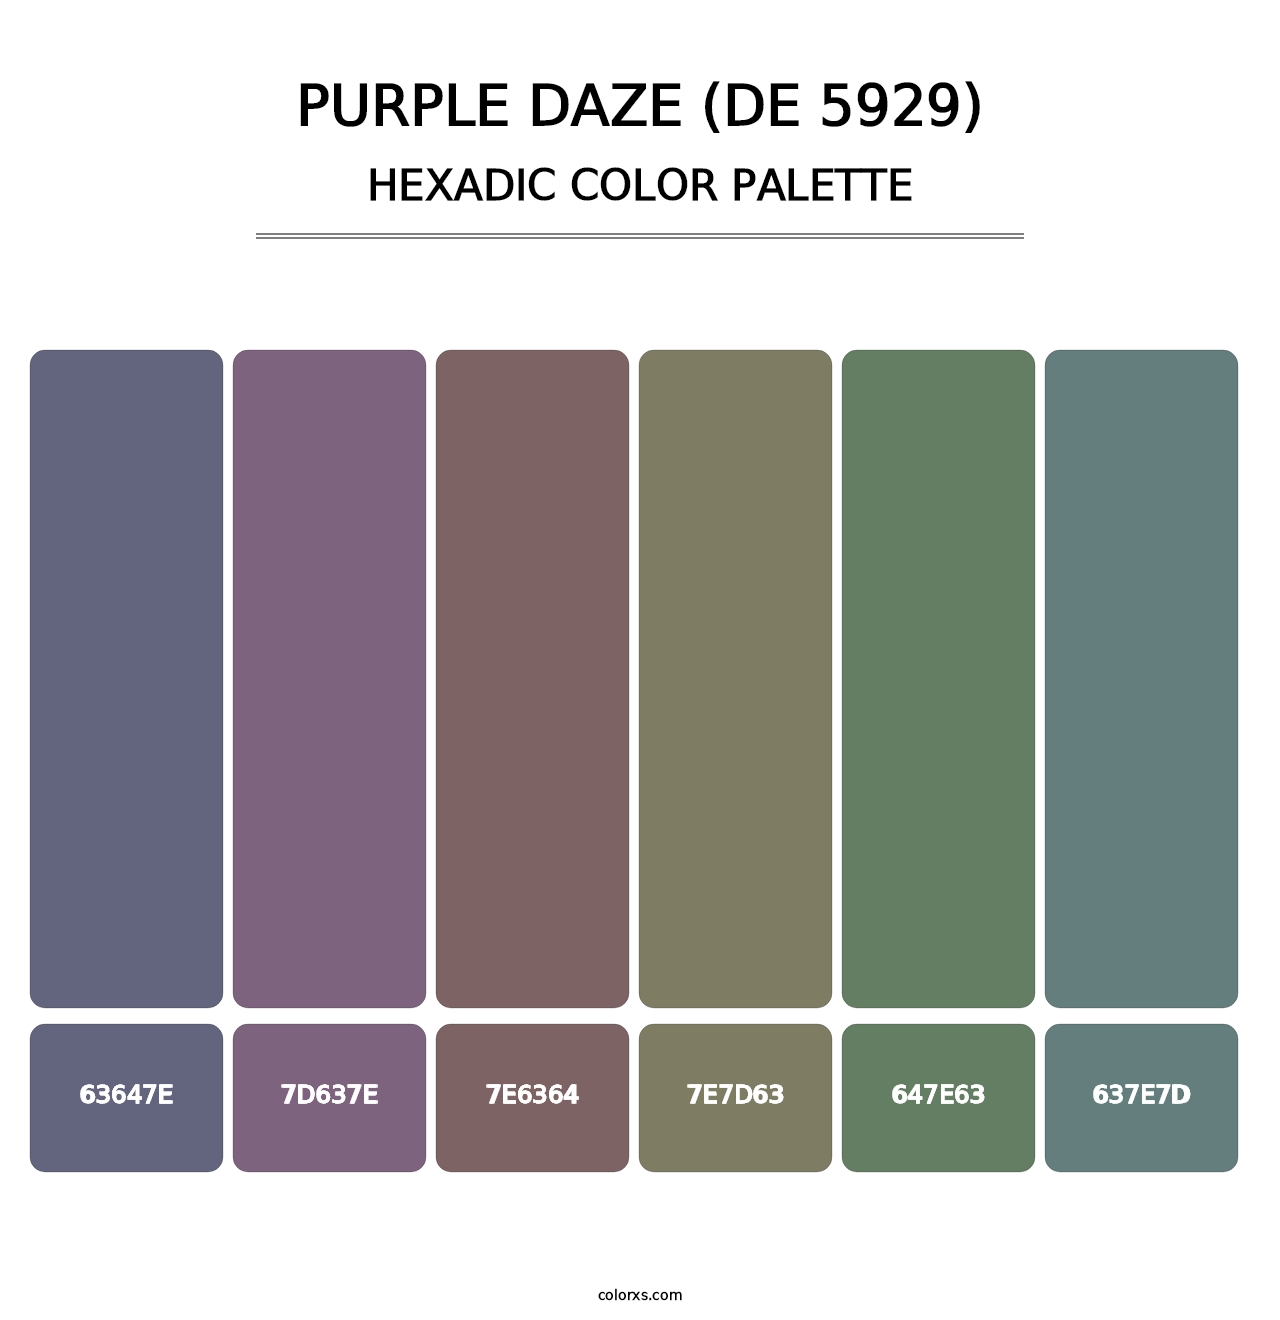 Purple Daze (DE 5929) - Hexadic Color Palette